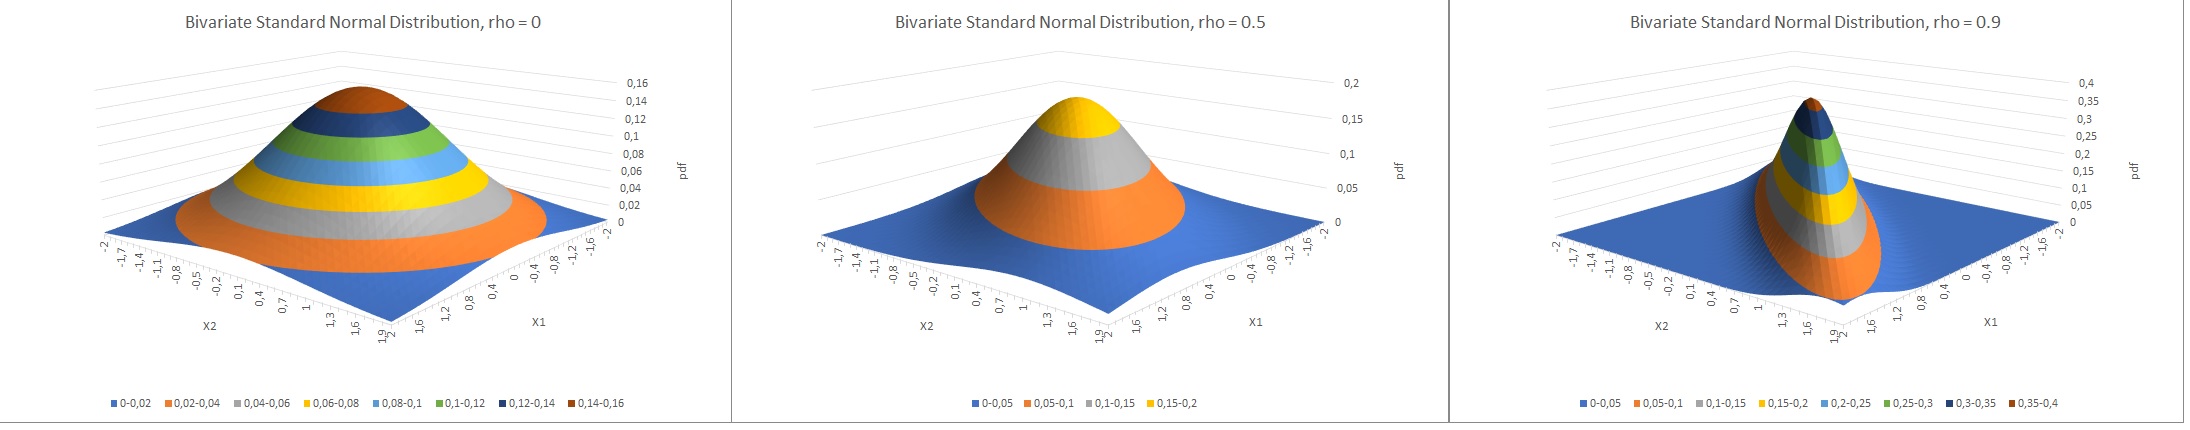 Bivariate Standard Normal Distribution examples